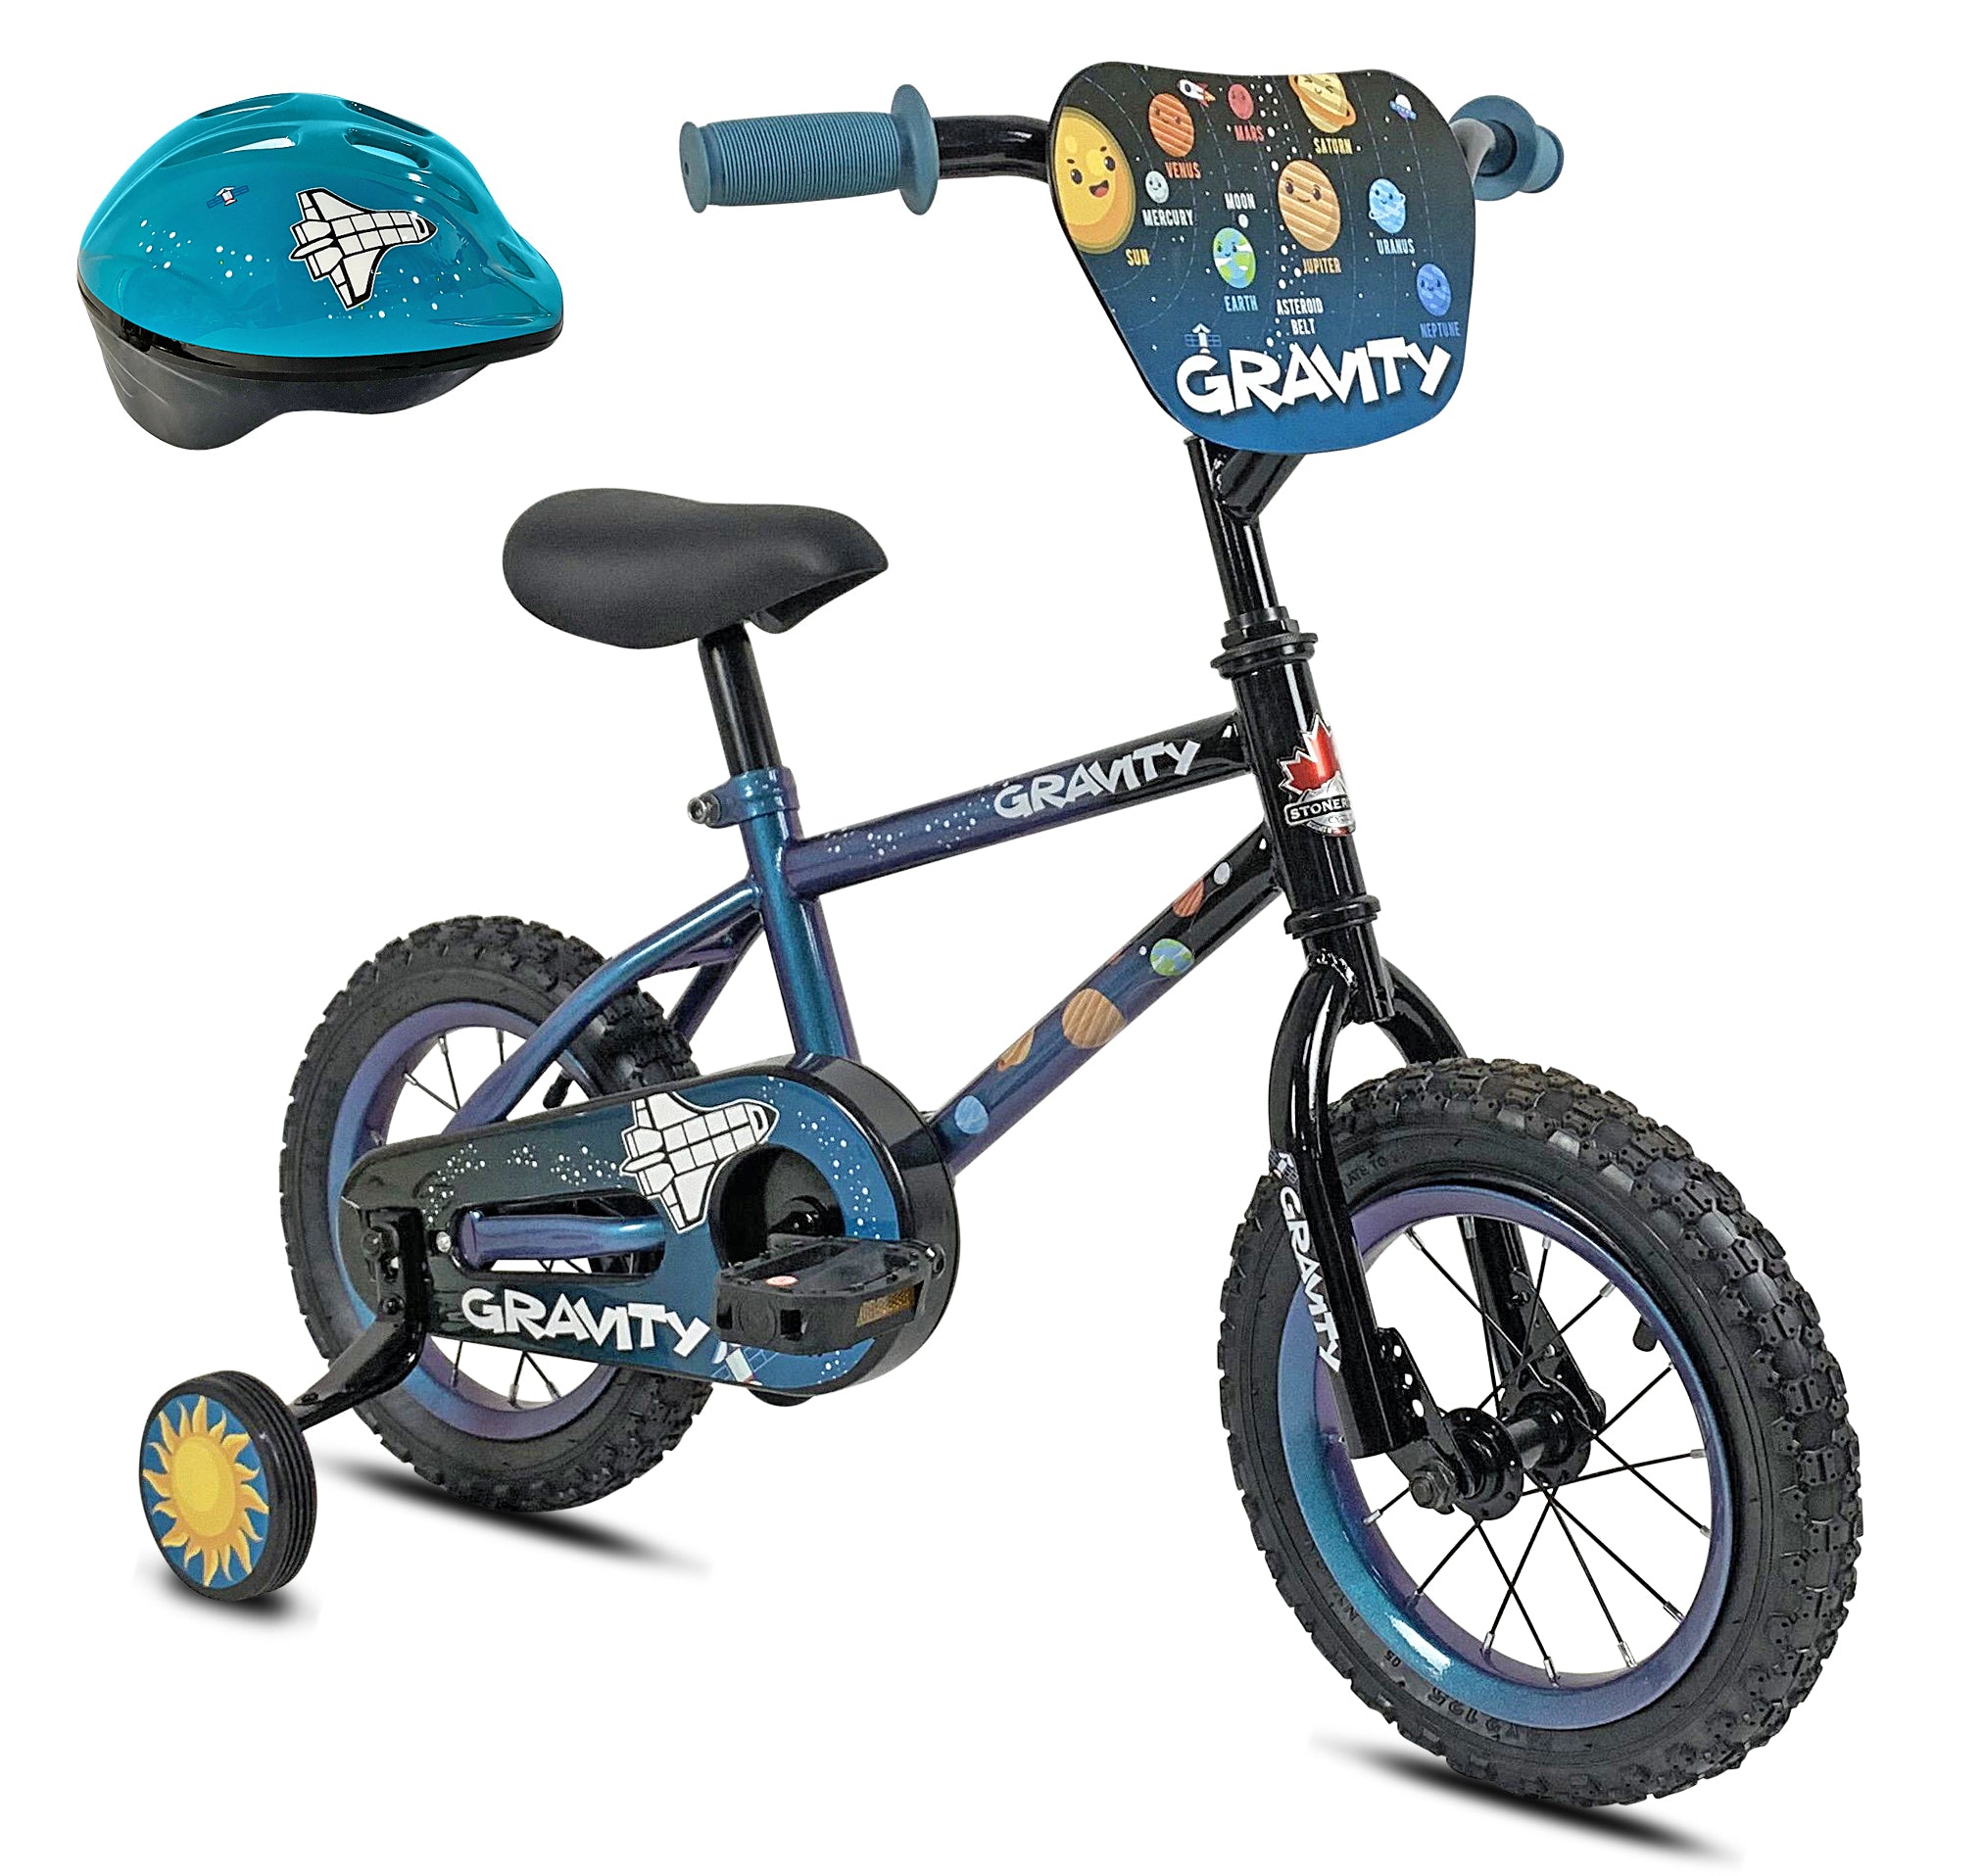 12" Gravity Bike with Helmet